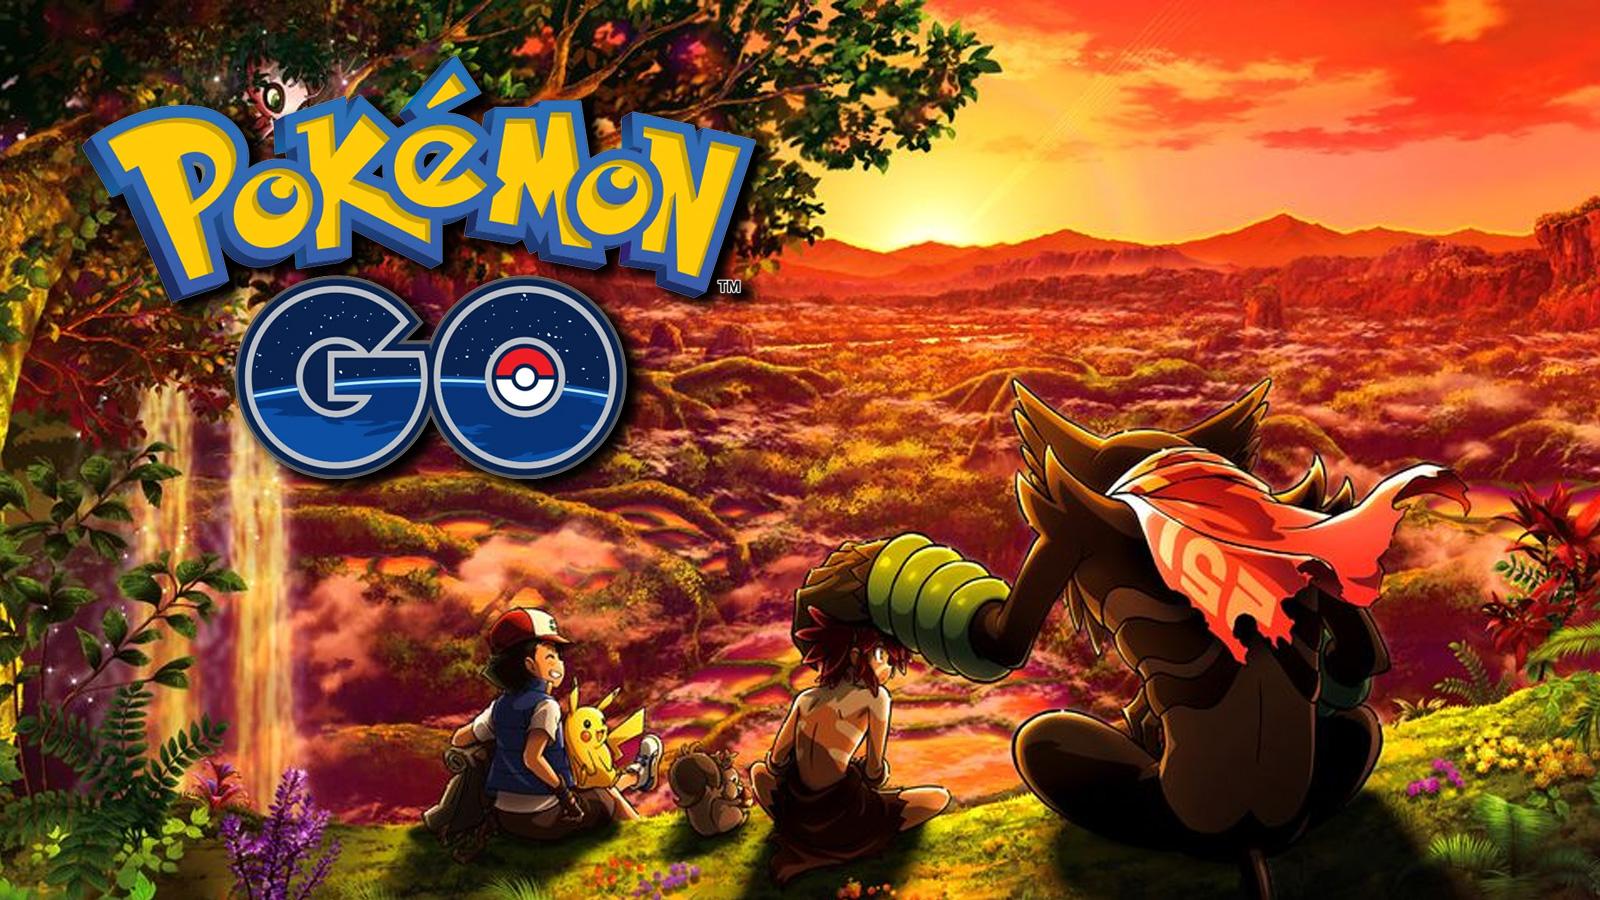 Screenshot of Pokemon movie Secrets of the Jungle with Go logo.